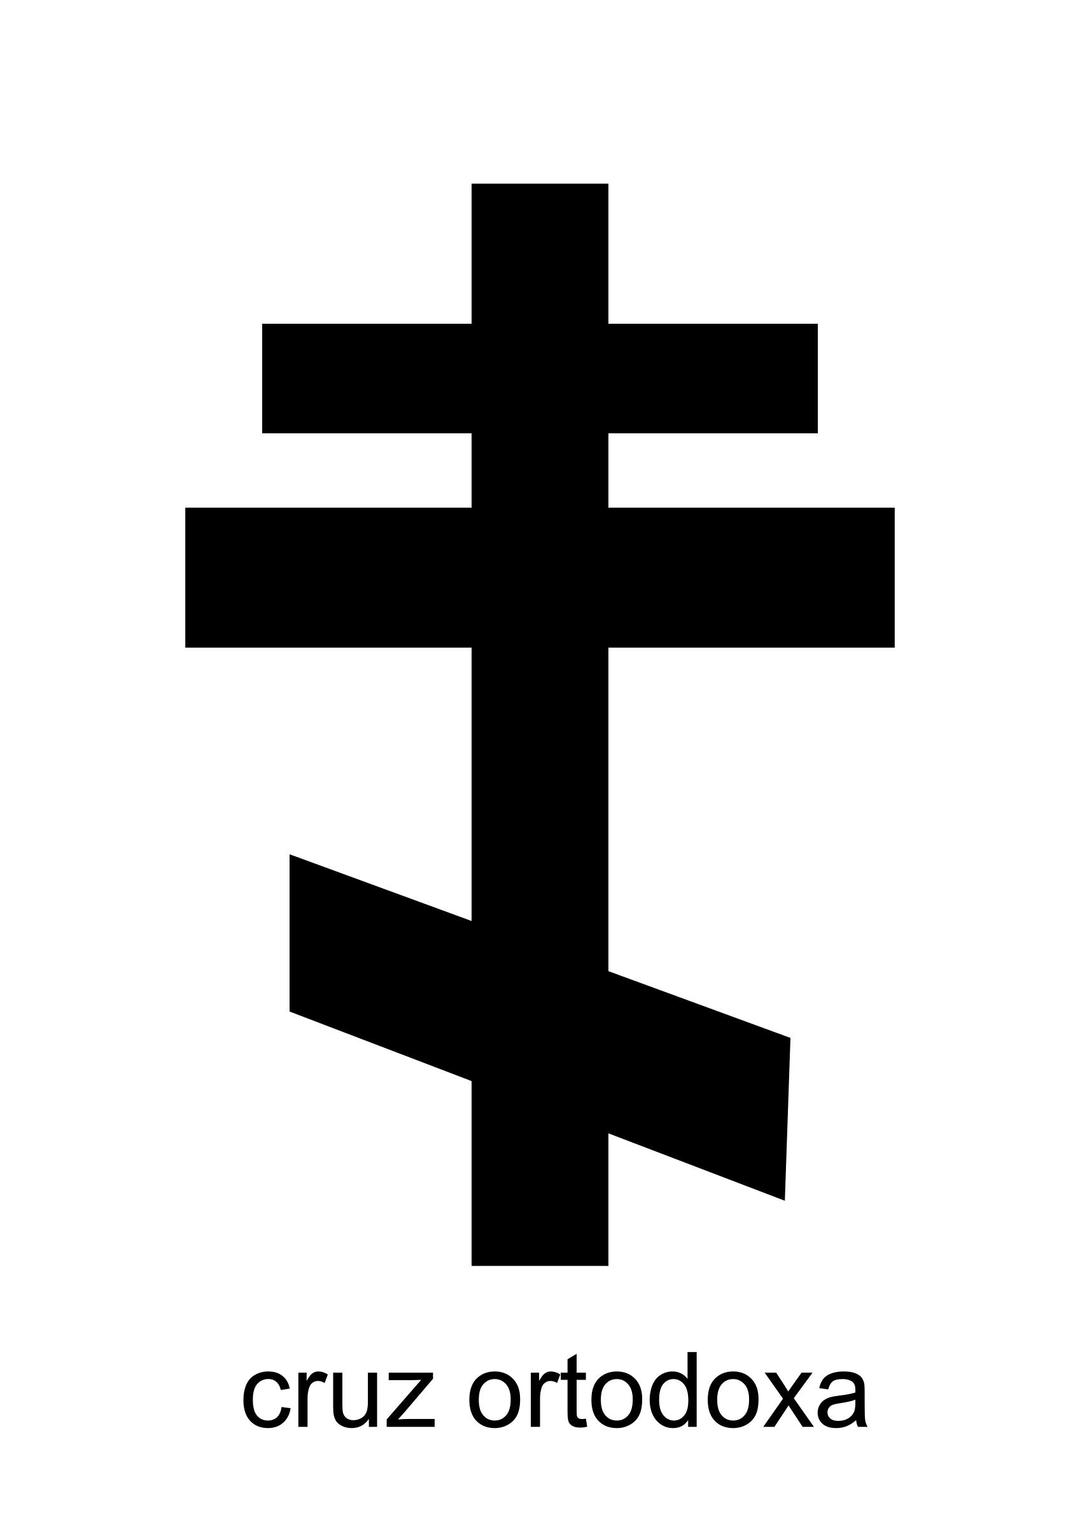 cruz ortodoxa png transparent